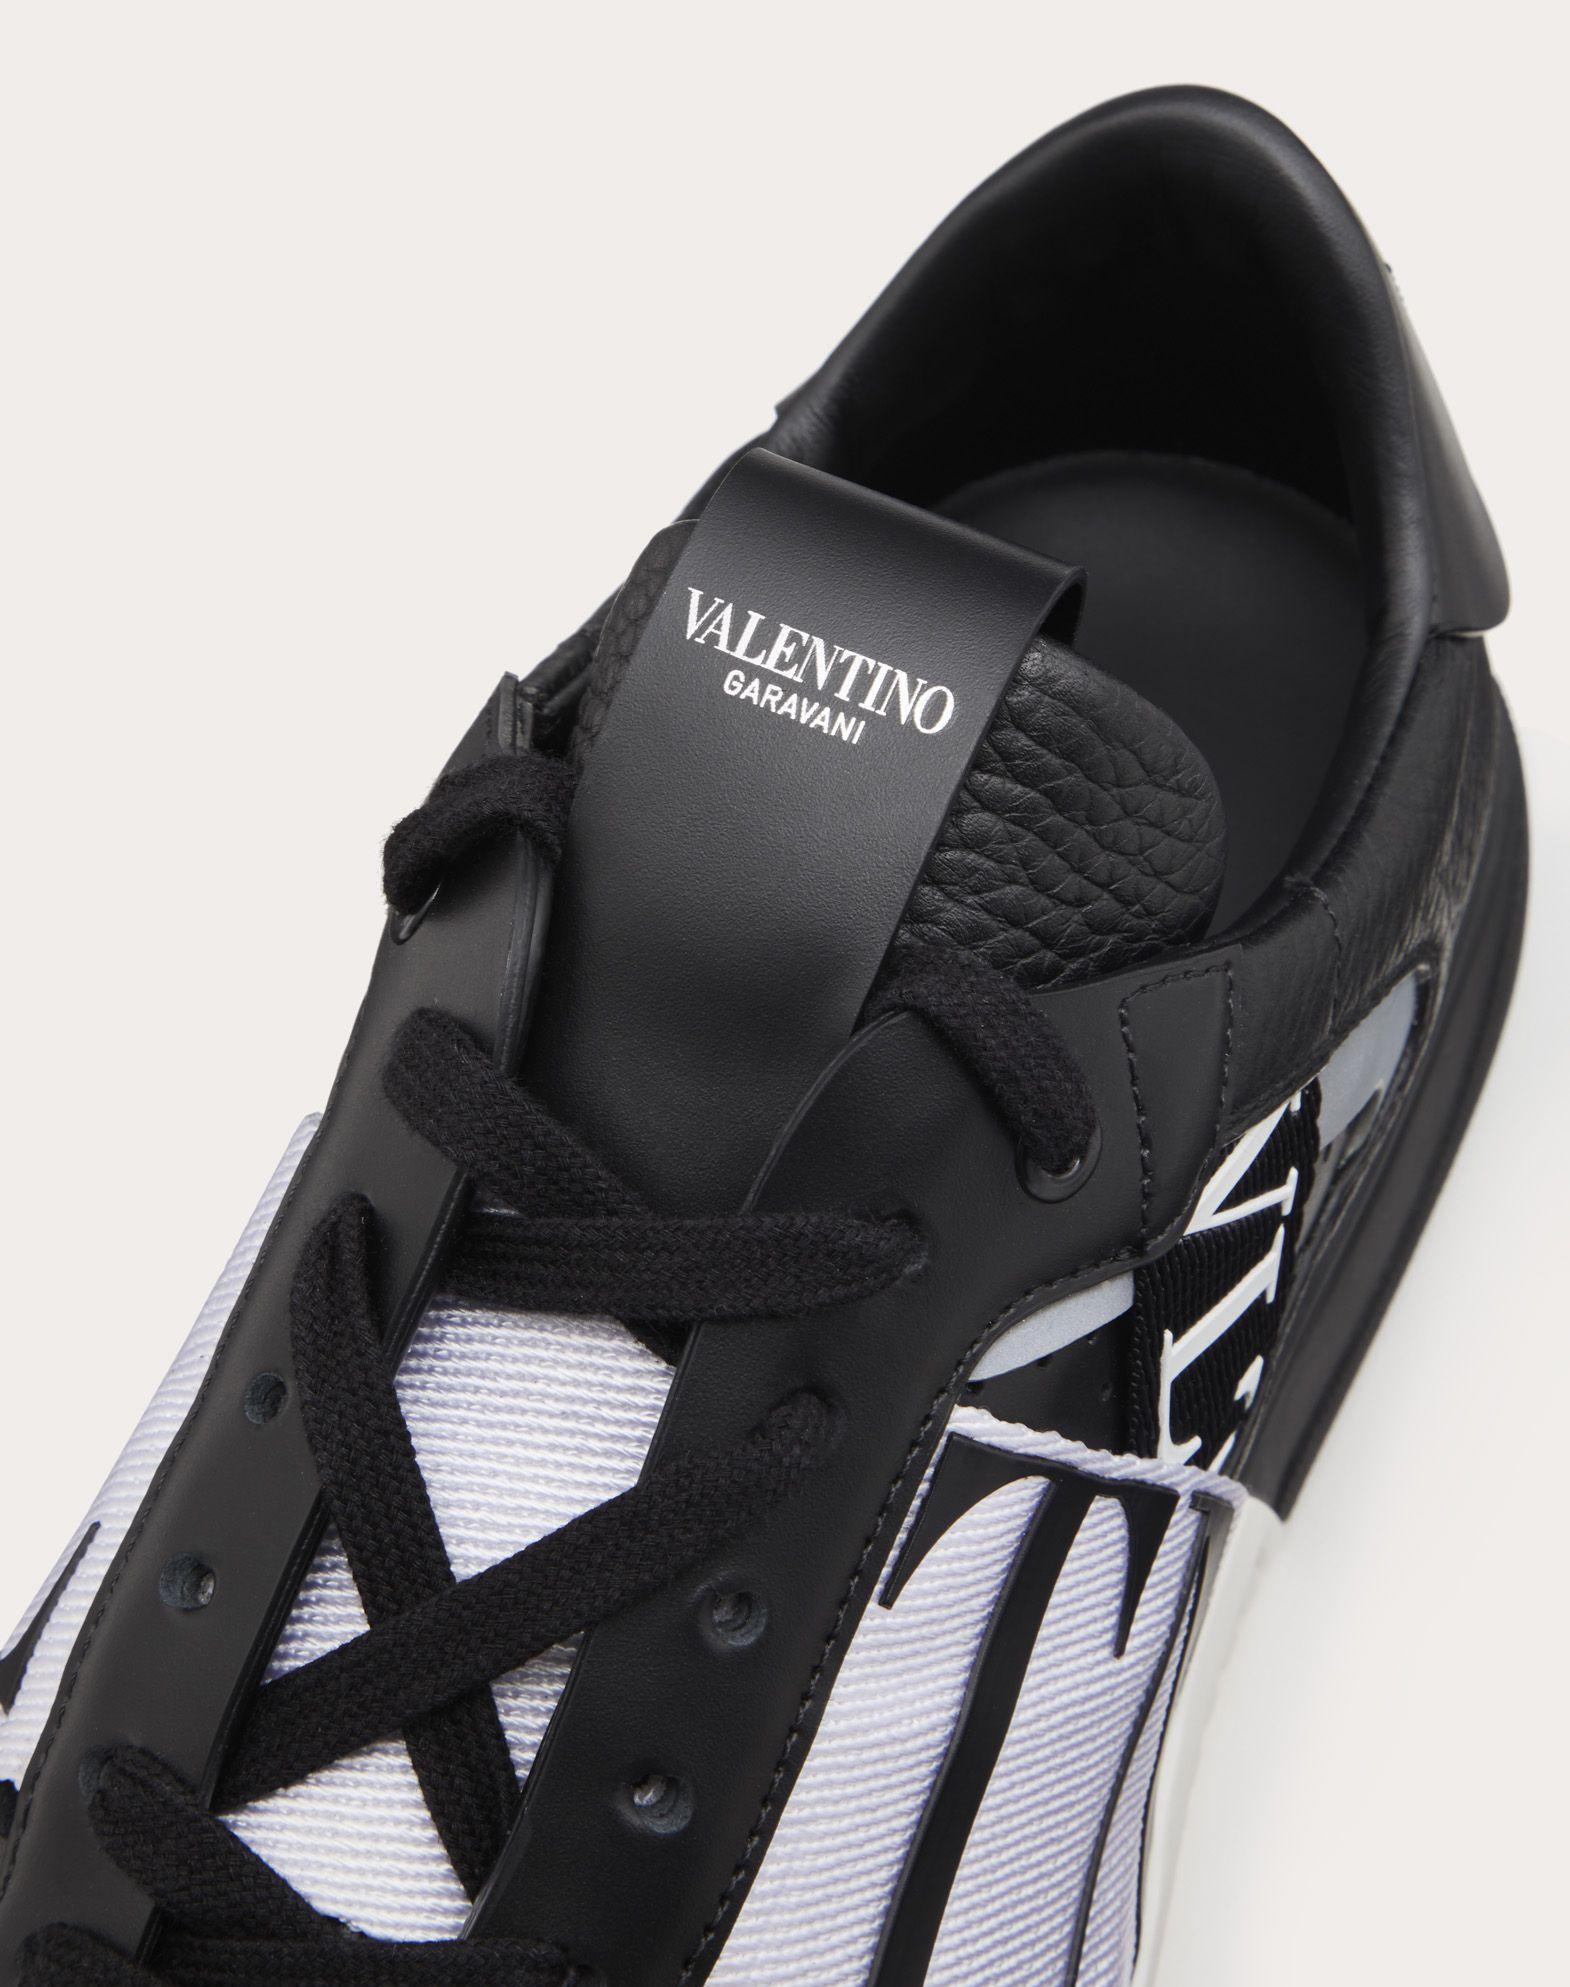 Valentino Garavani Leather Calfskin Vl7n Sneaker With Bands in Black ...